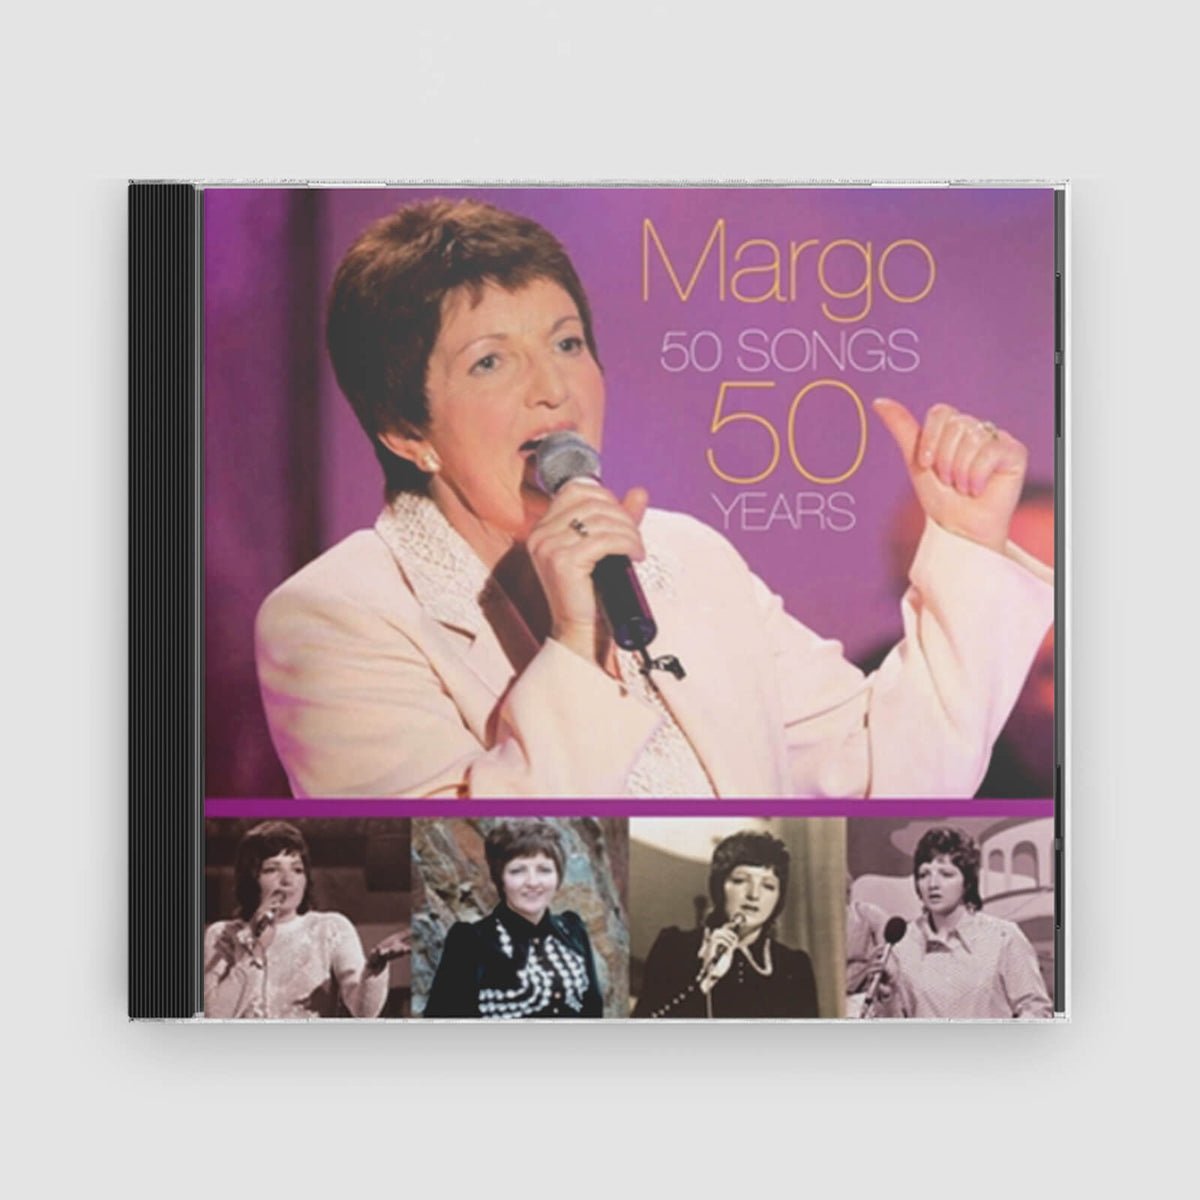 Margo : 50 Songs 50 Years